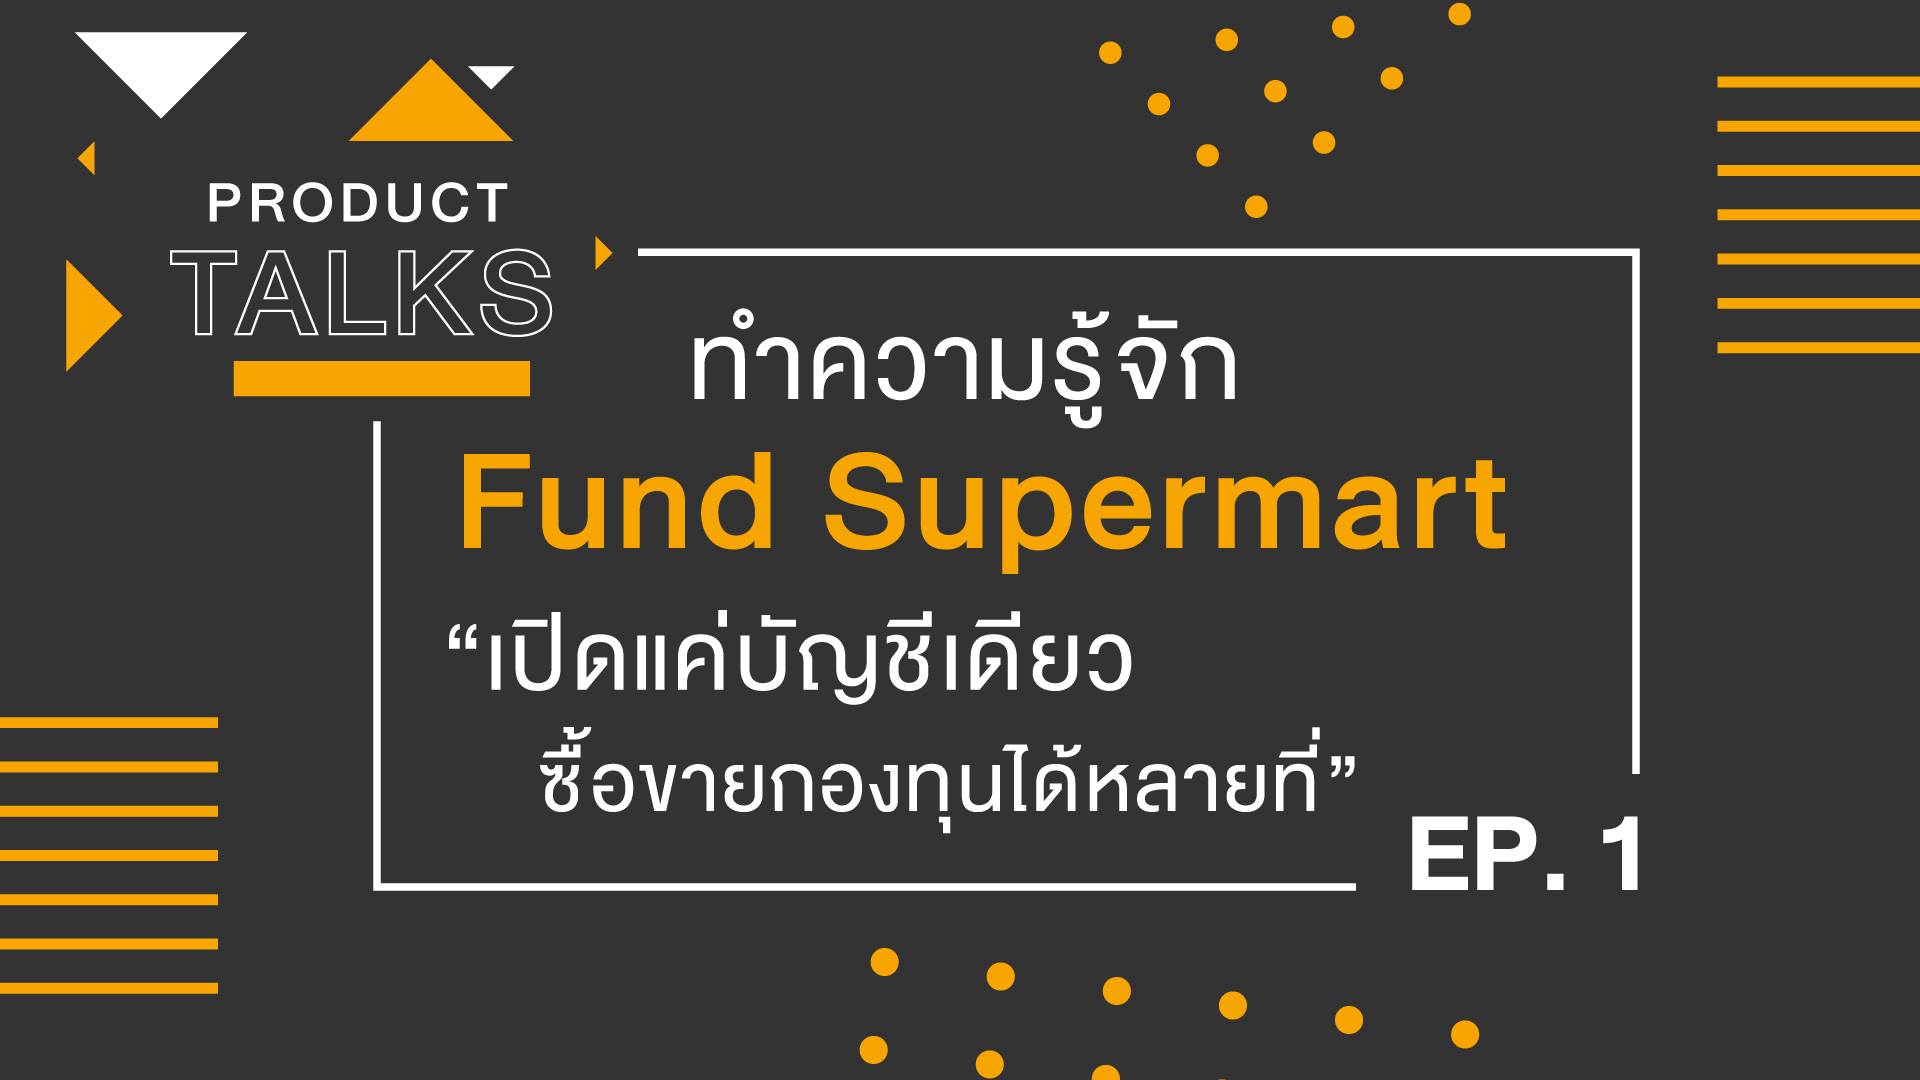 Product Talks: EP.1 Product Talks: EP.1 ทำความรู้จัก Fund Supermart “เปิดแค่บัญชีเดียว ซื้อขายกองทุนได้หลายที่”